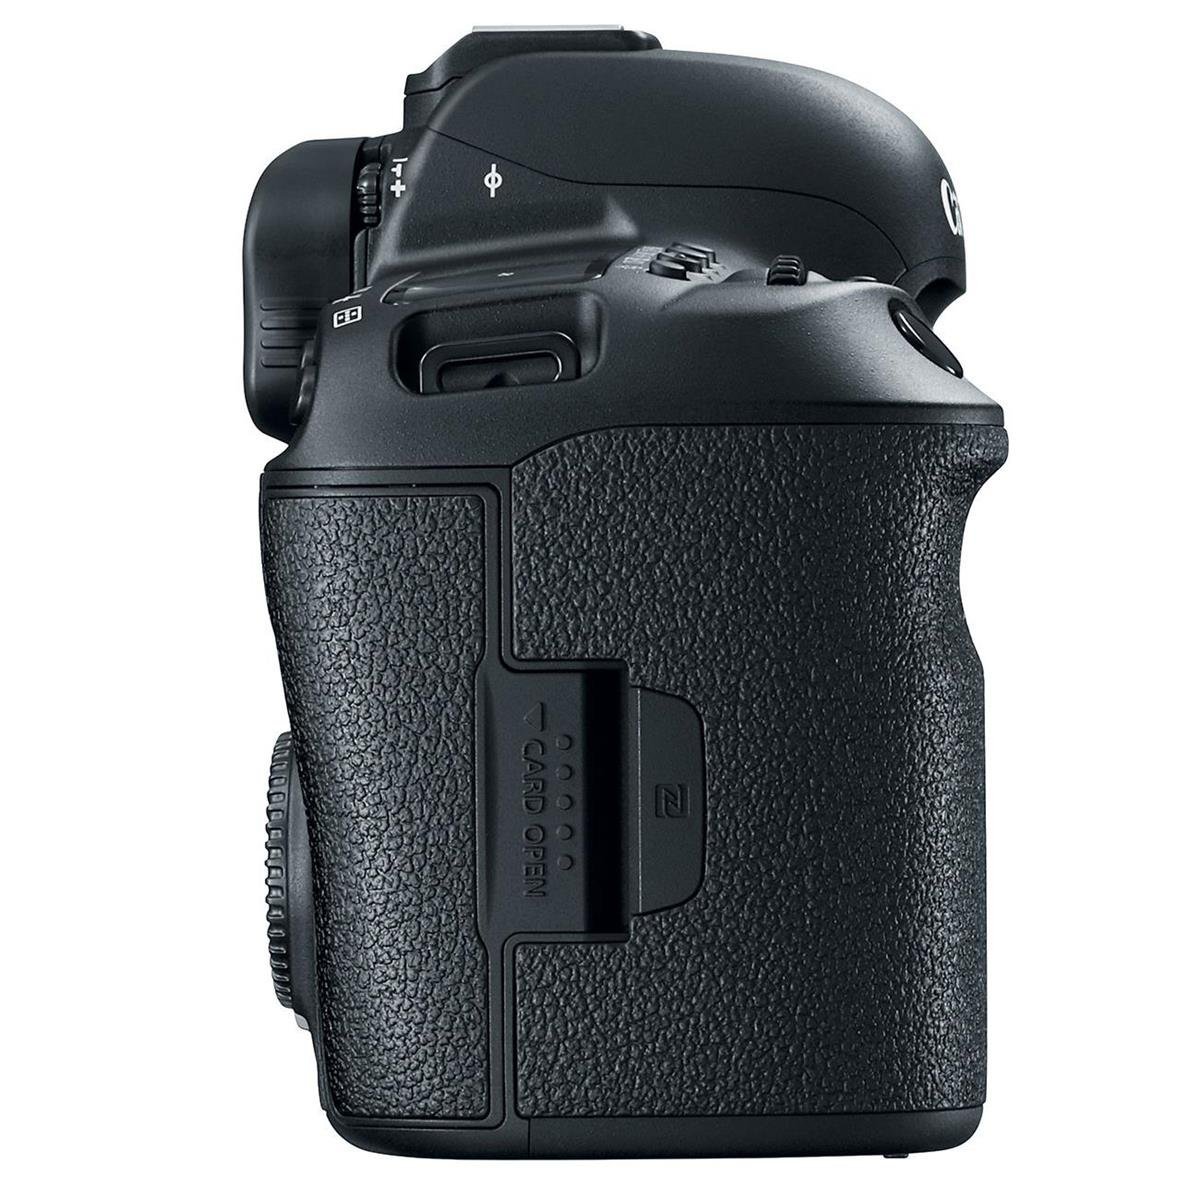 Canon EOS 5D Mark IV DSLR Body - With Canon BG-E20 Battery Grip (Renewed)